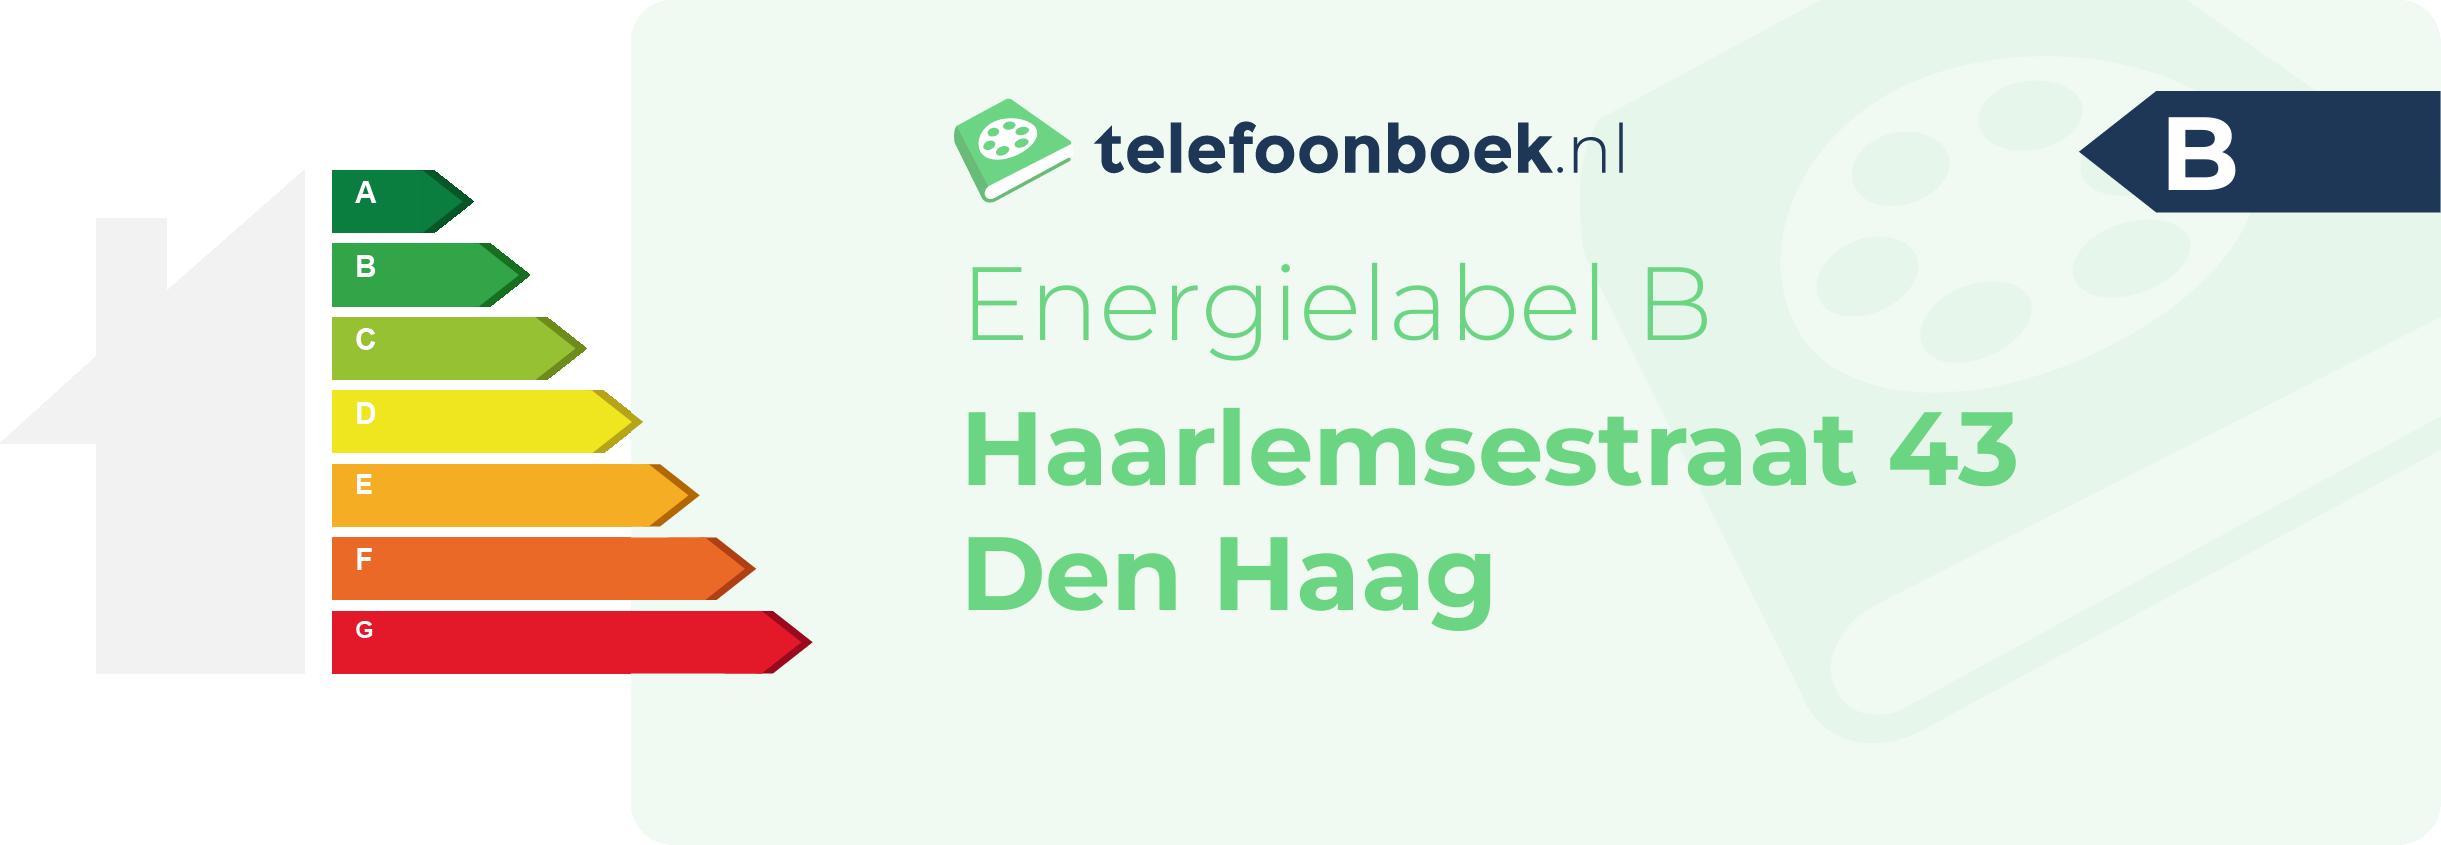 Energielabel Haarlemsestraat 43 Den Haag